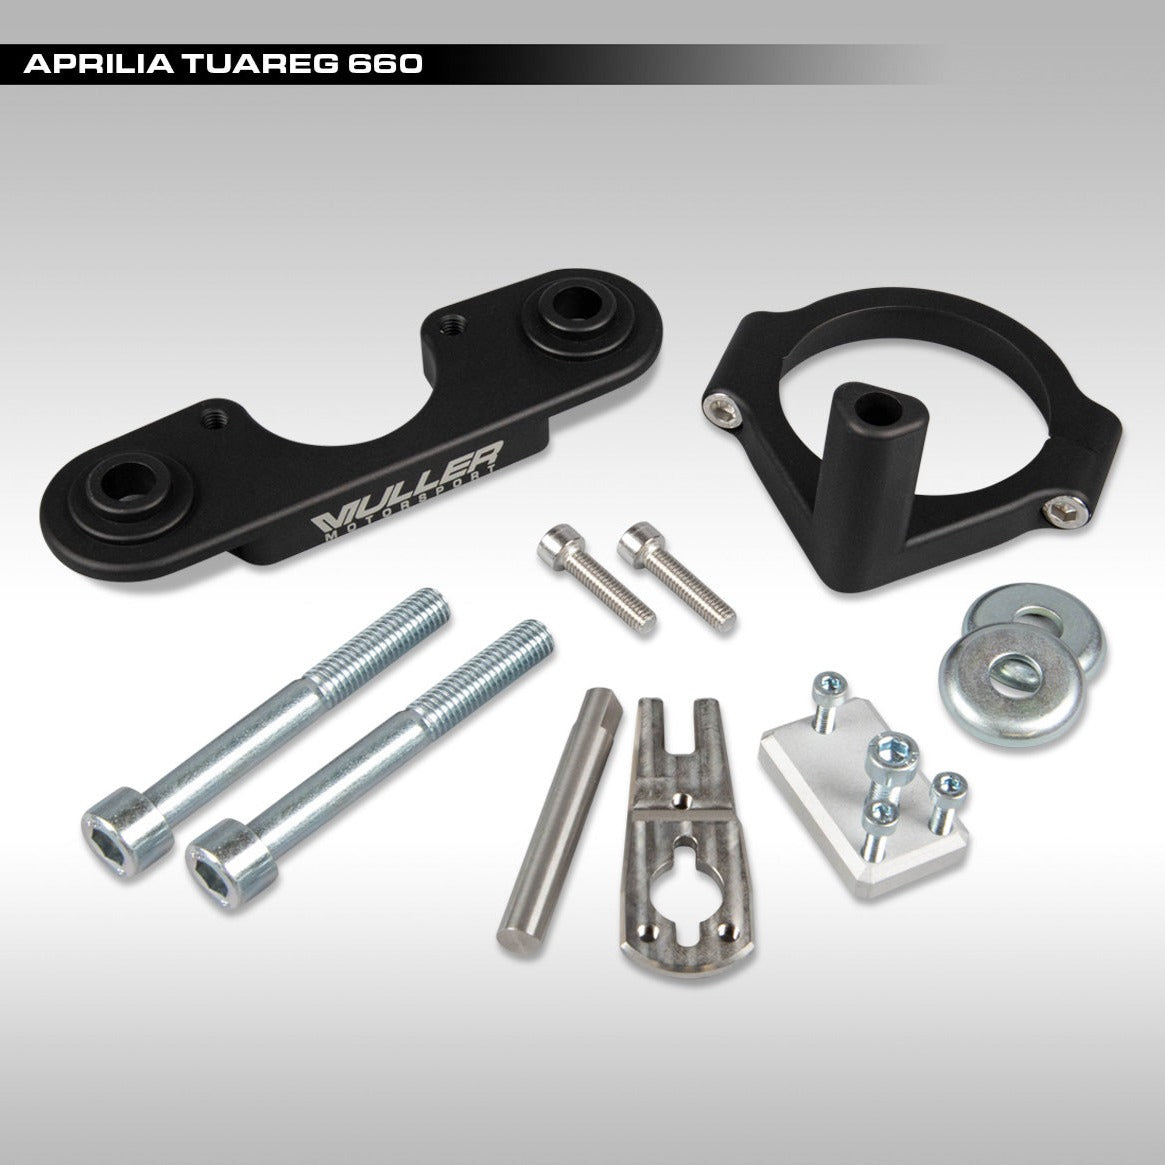 Steering damper kit for the Aprilia Tuareg 660. Muller Motorsports steering stabilizer mount kit works with a Scotts Performance steering stabilizer. 